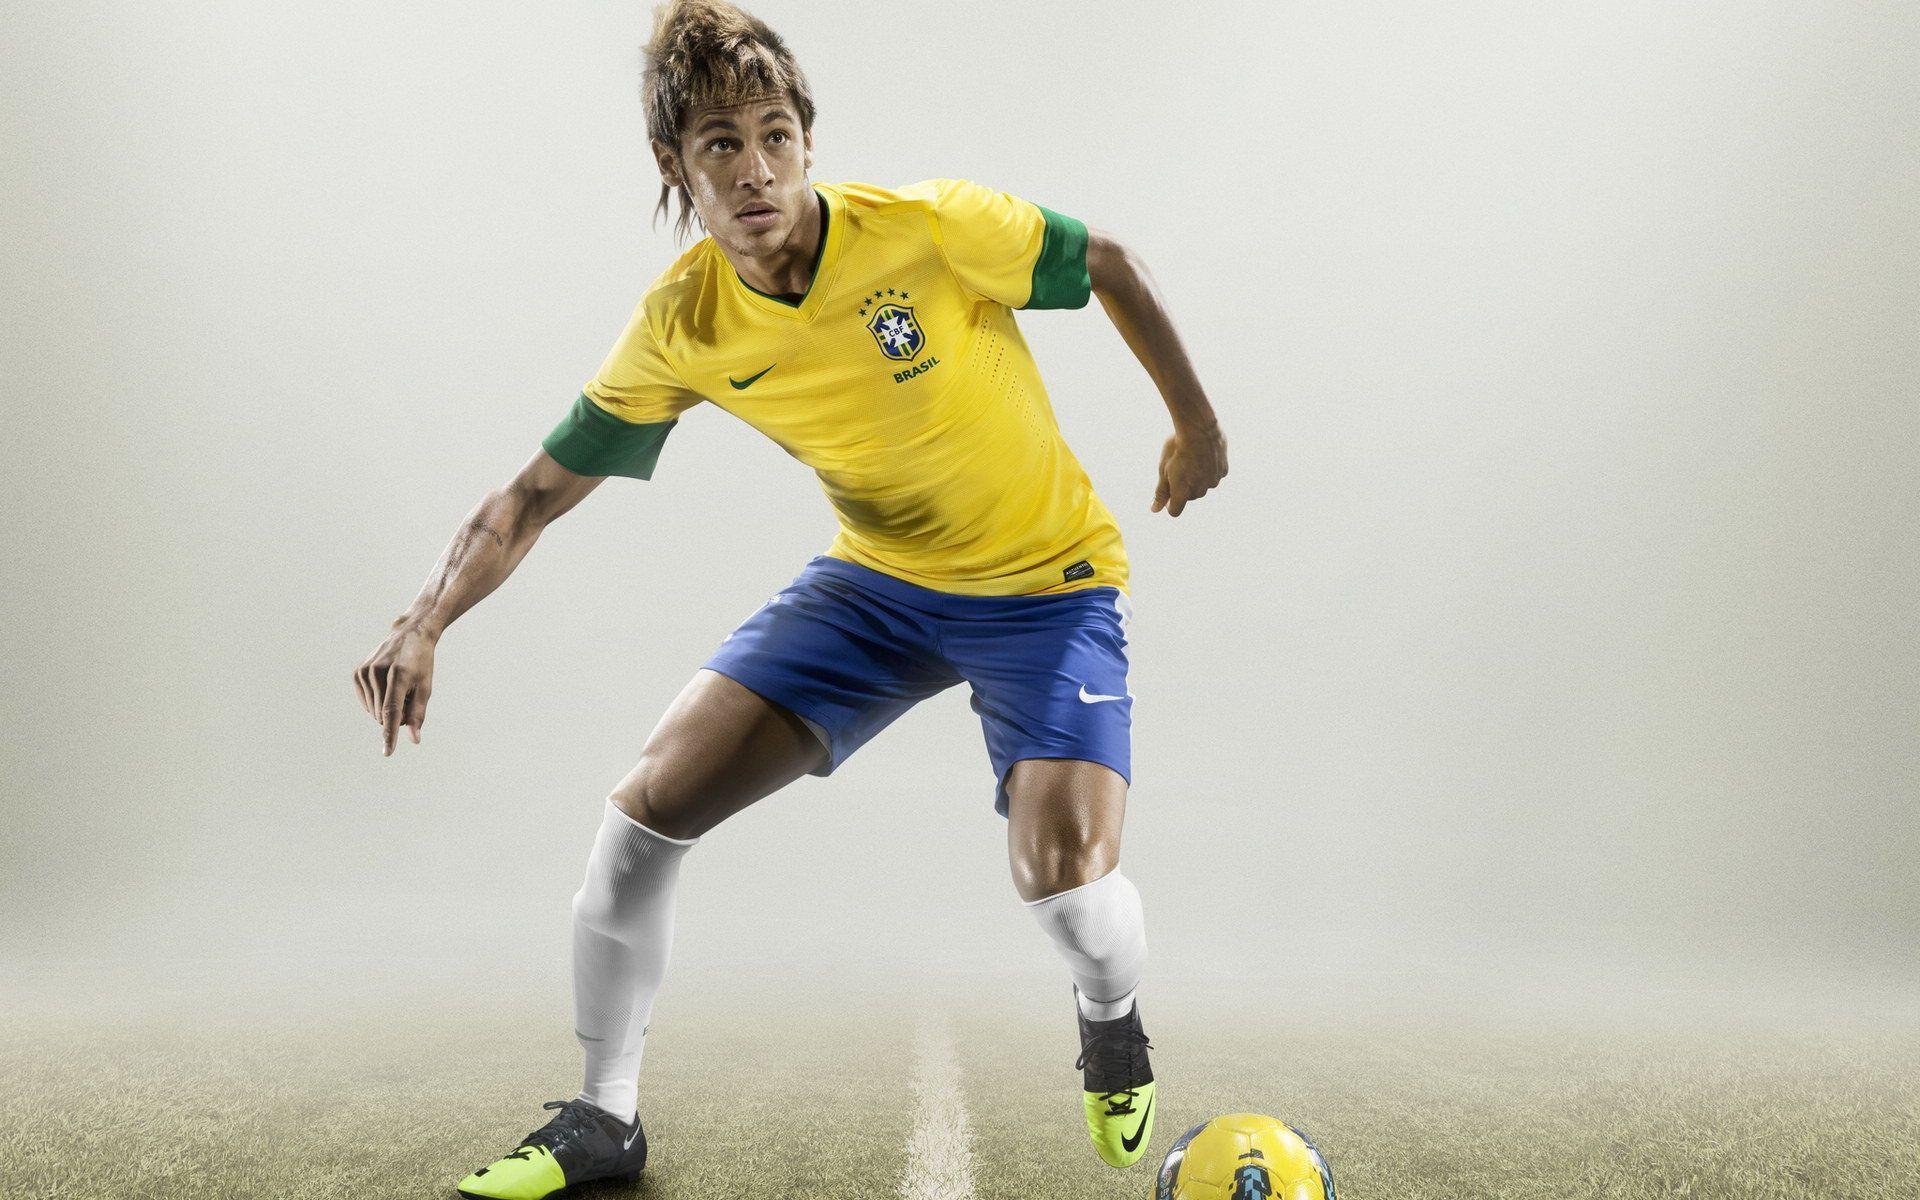 Neymar HD Wallpaper. Neymar Image Free Download